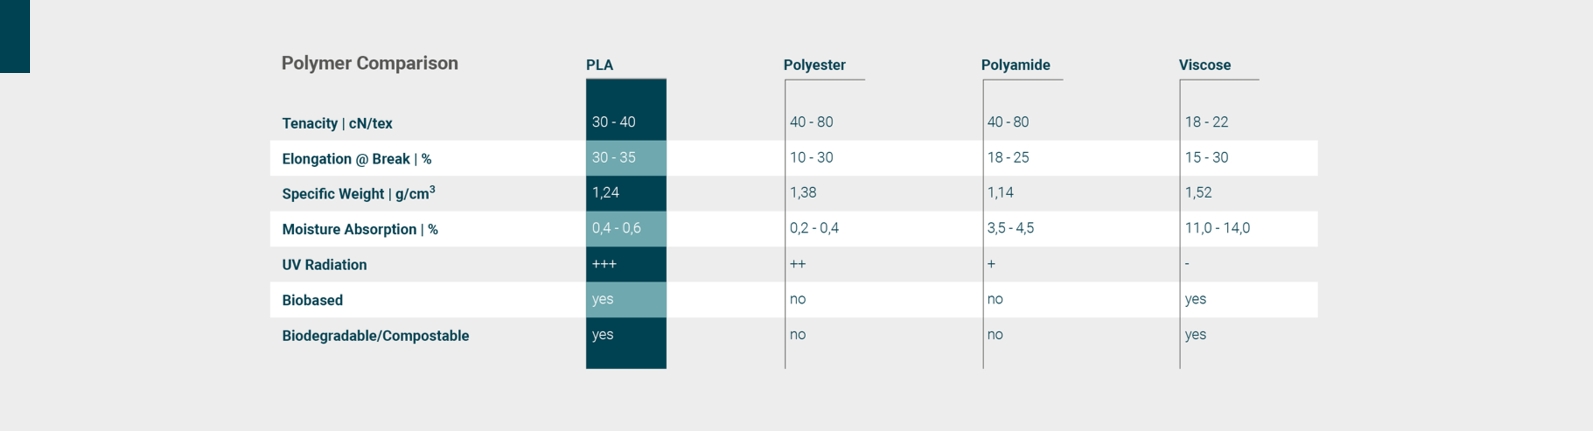 PLA Polymer Comparison